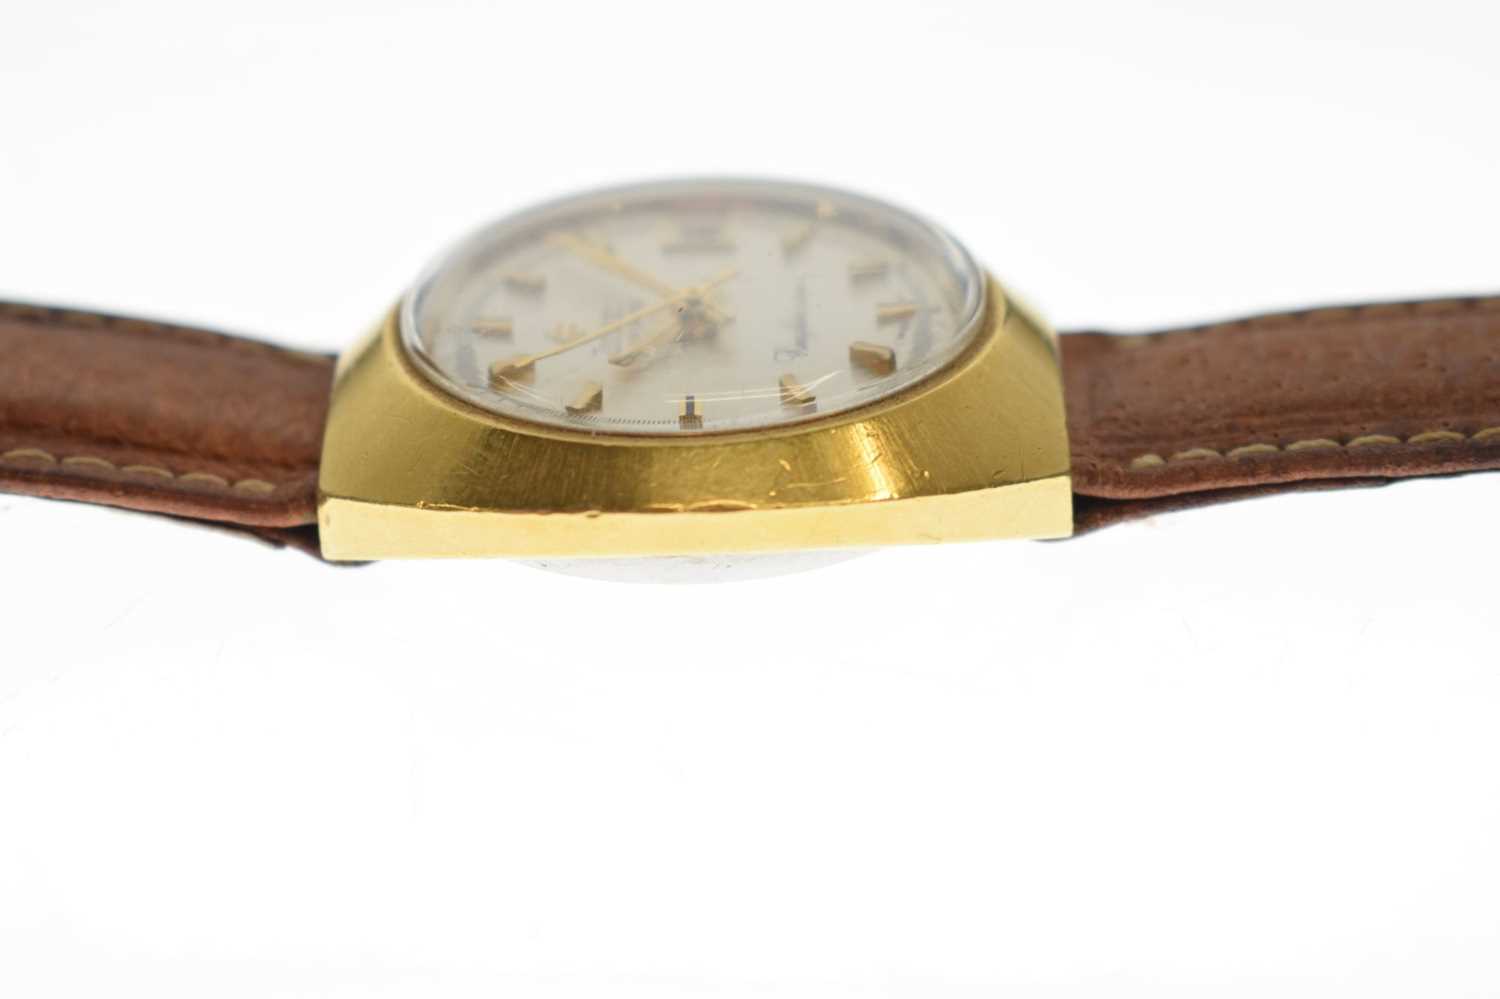 Zodiac - Gentleman's 'Kingline' Chronometer gold-plated cased wristwatch - Image 5 of 6